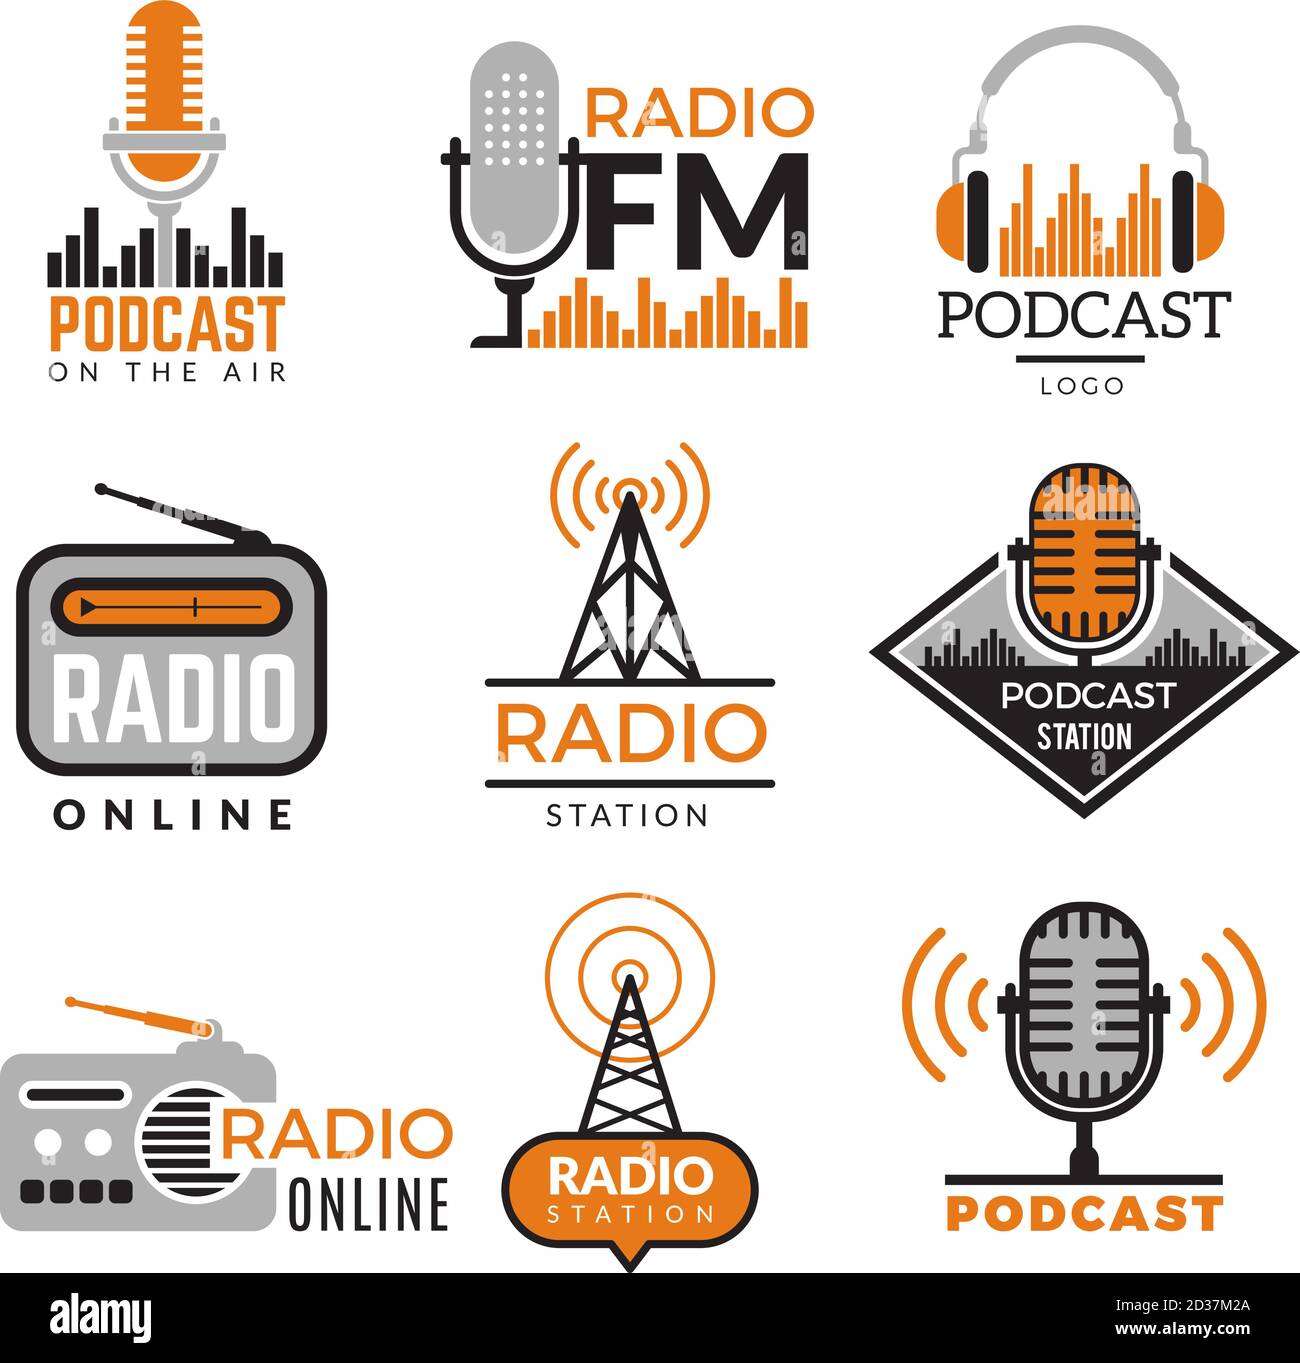 Radio-Logo. Podcast Türme drahtlose Abzeichen Radiosender Symbole Vektor Sammlung Stock Vektor